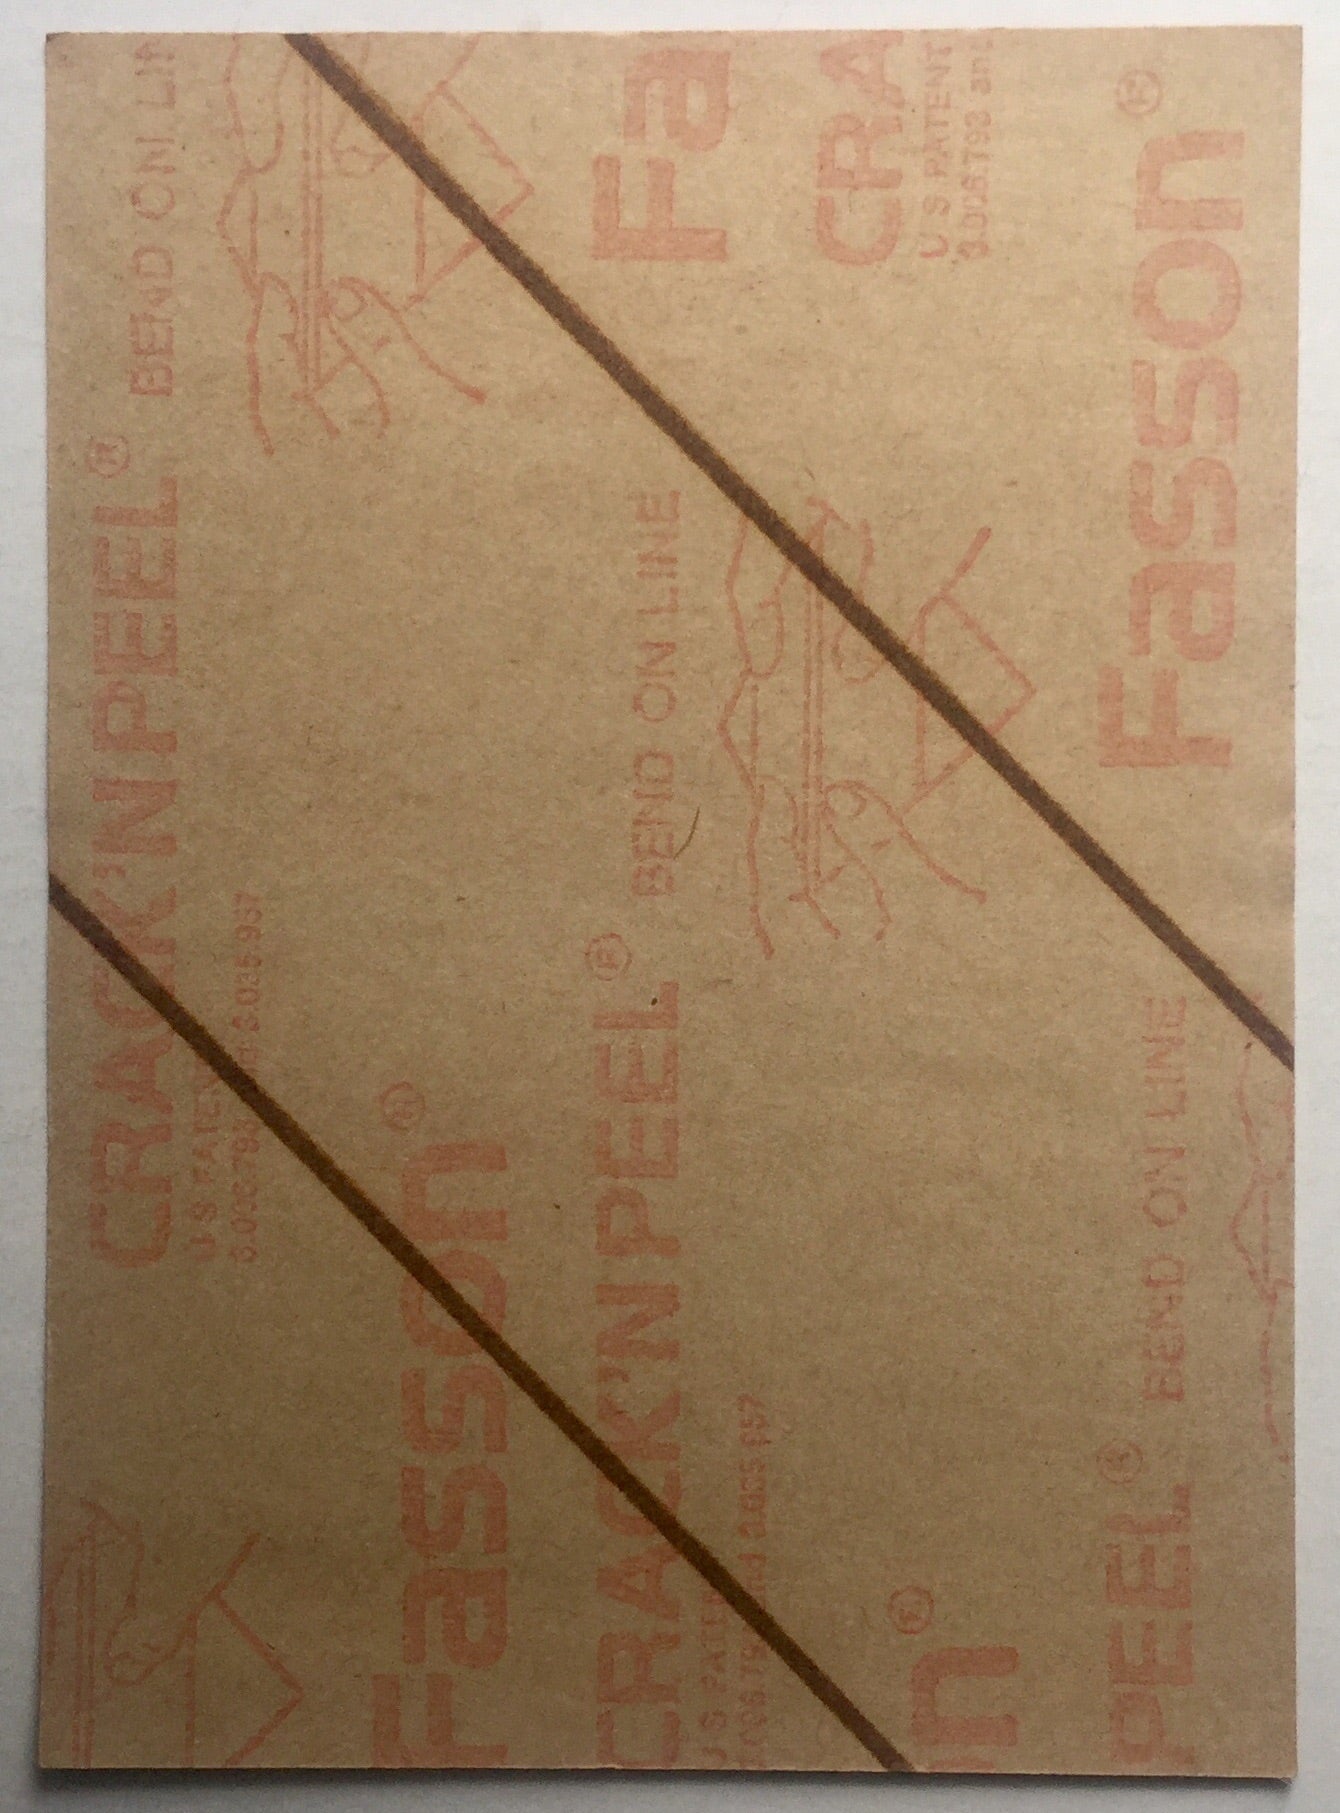 Cheap Trick Original Unused Concert Backstage Pass Ticket Boston Garden 5th May 1980